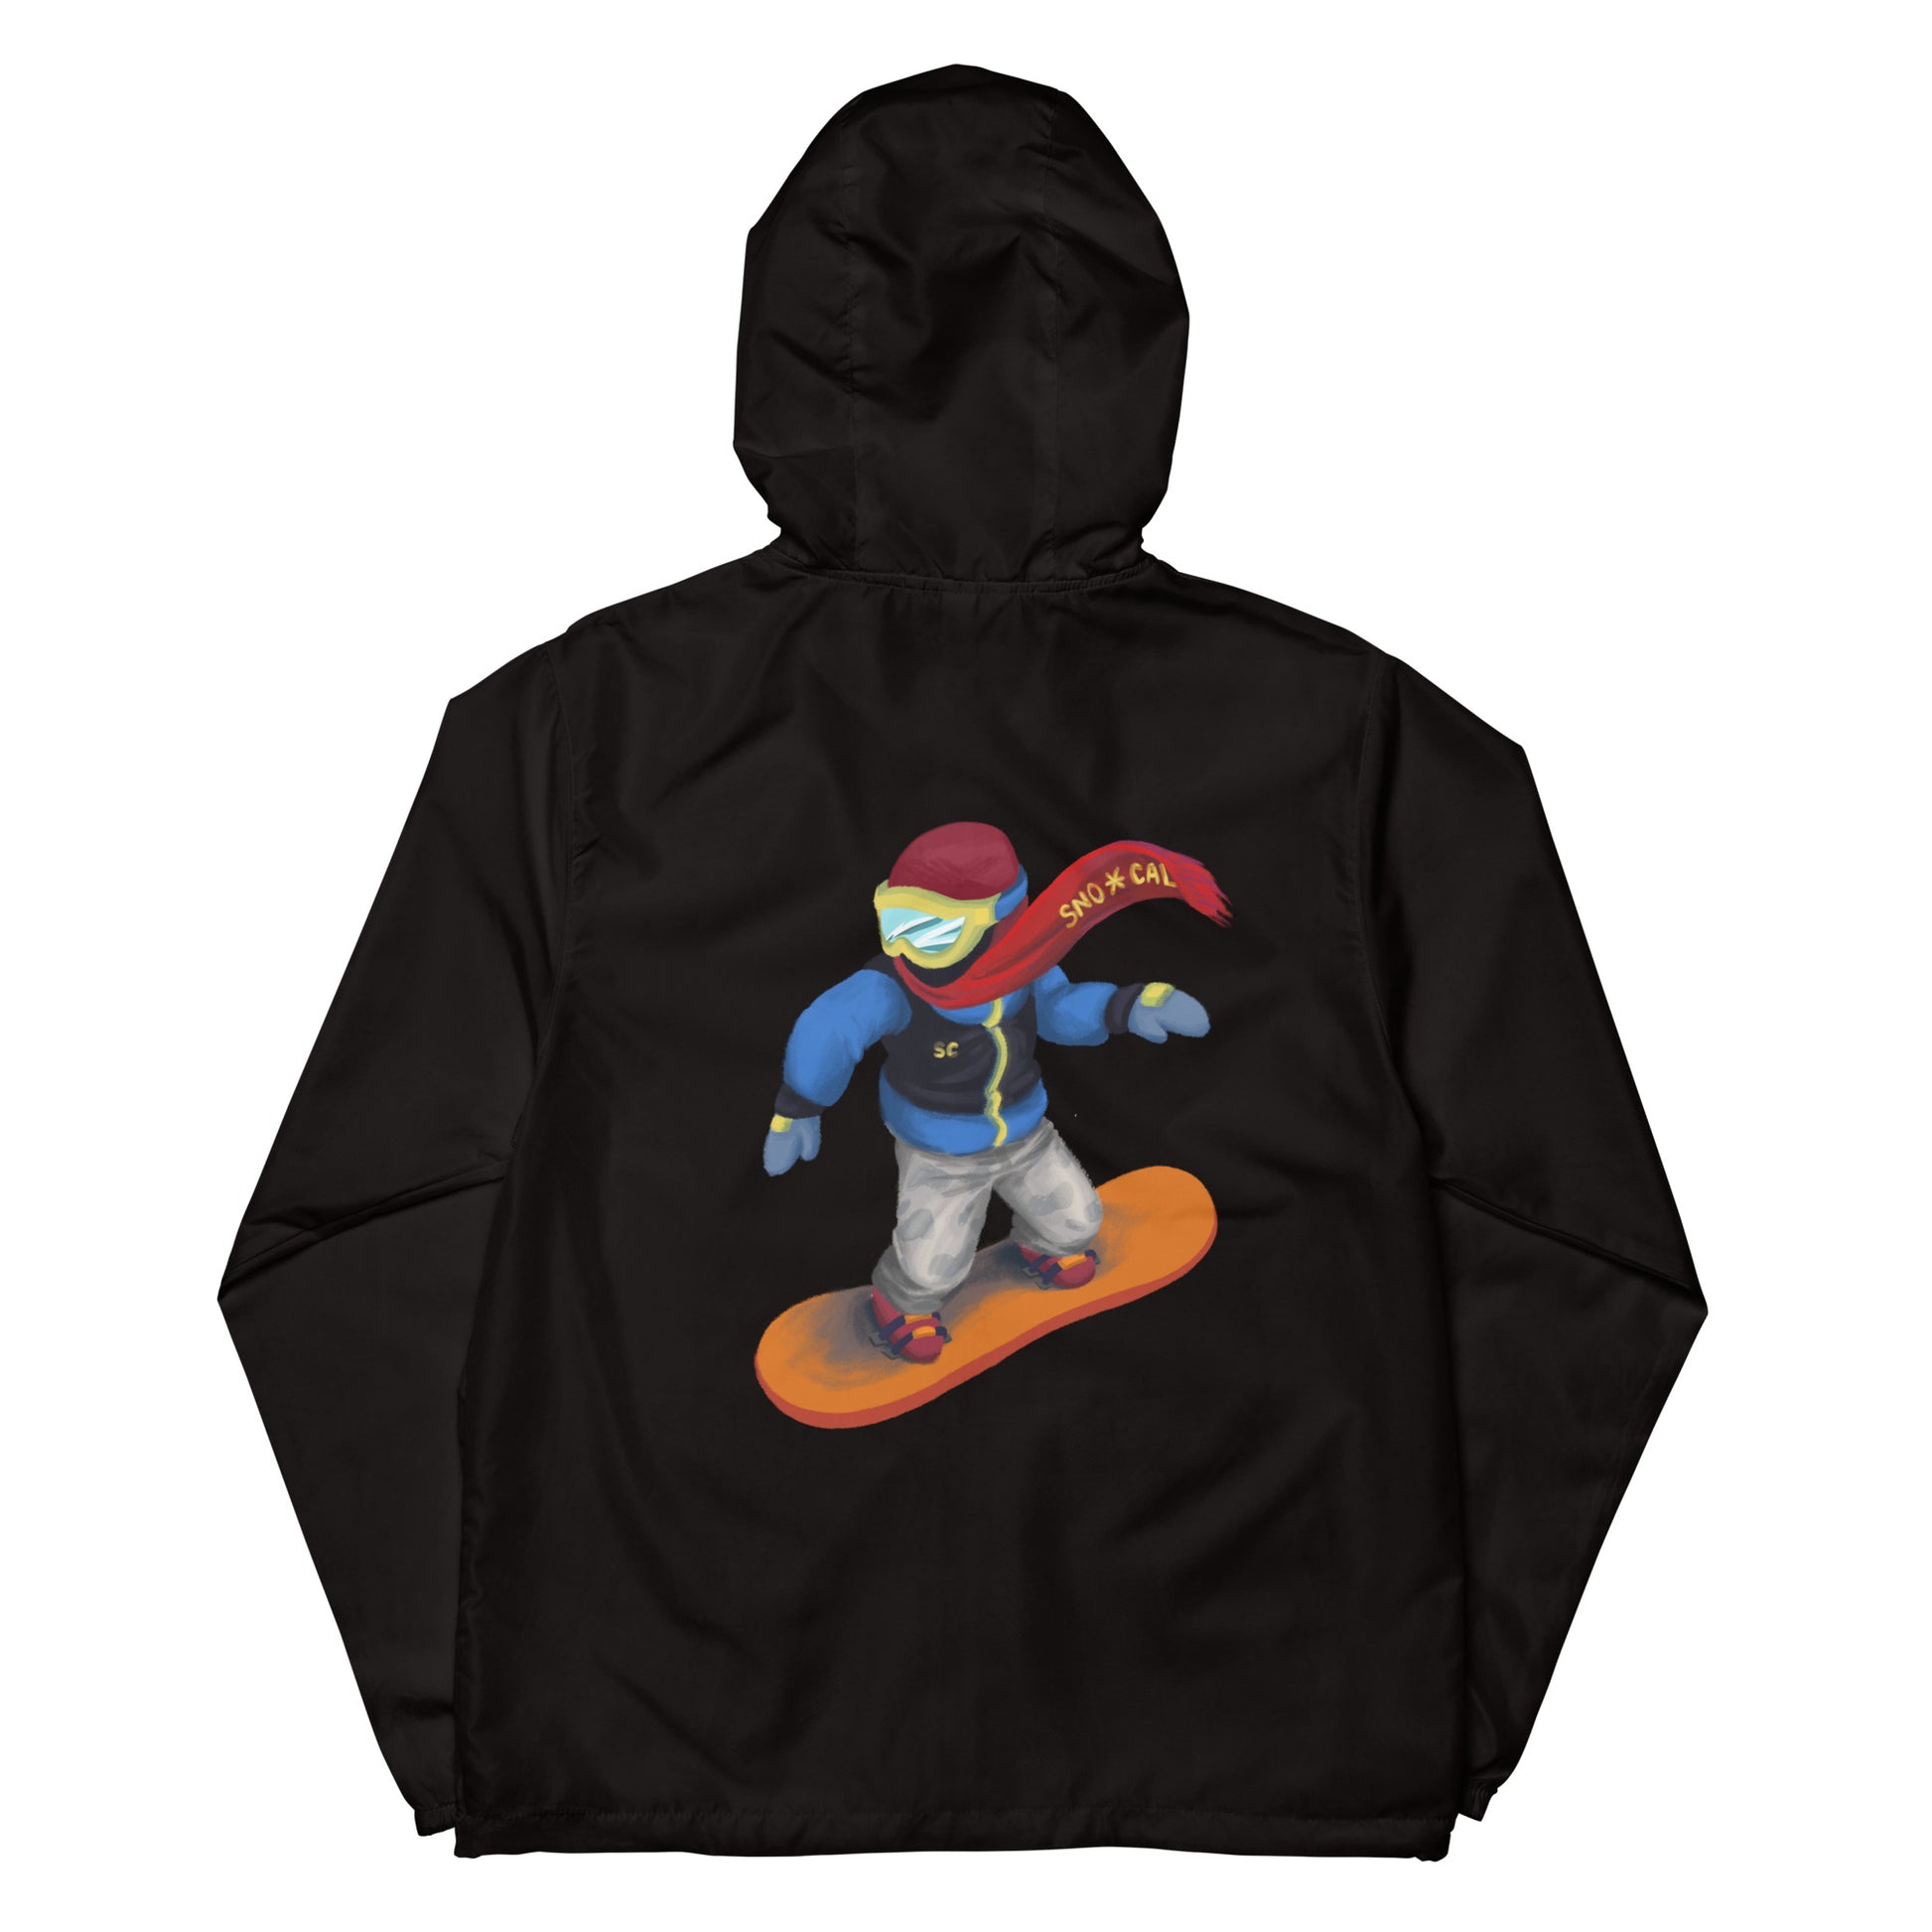 black snowboard emoji hoodie with zipper